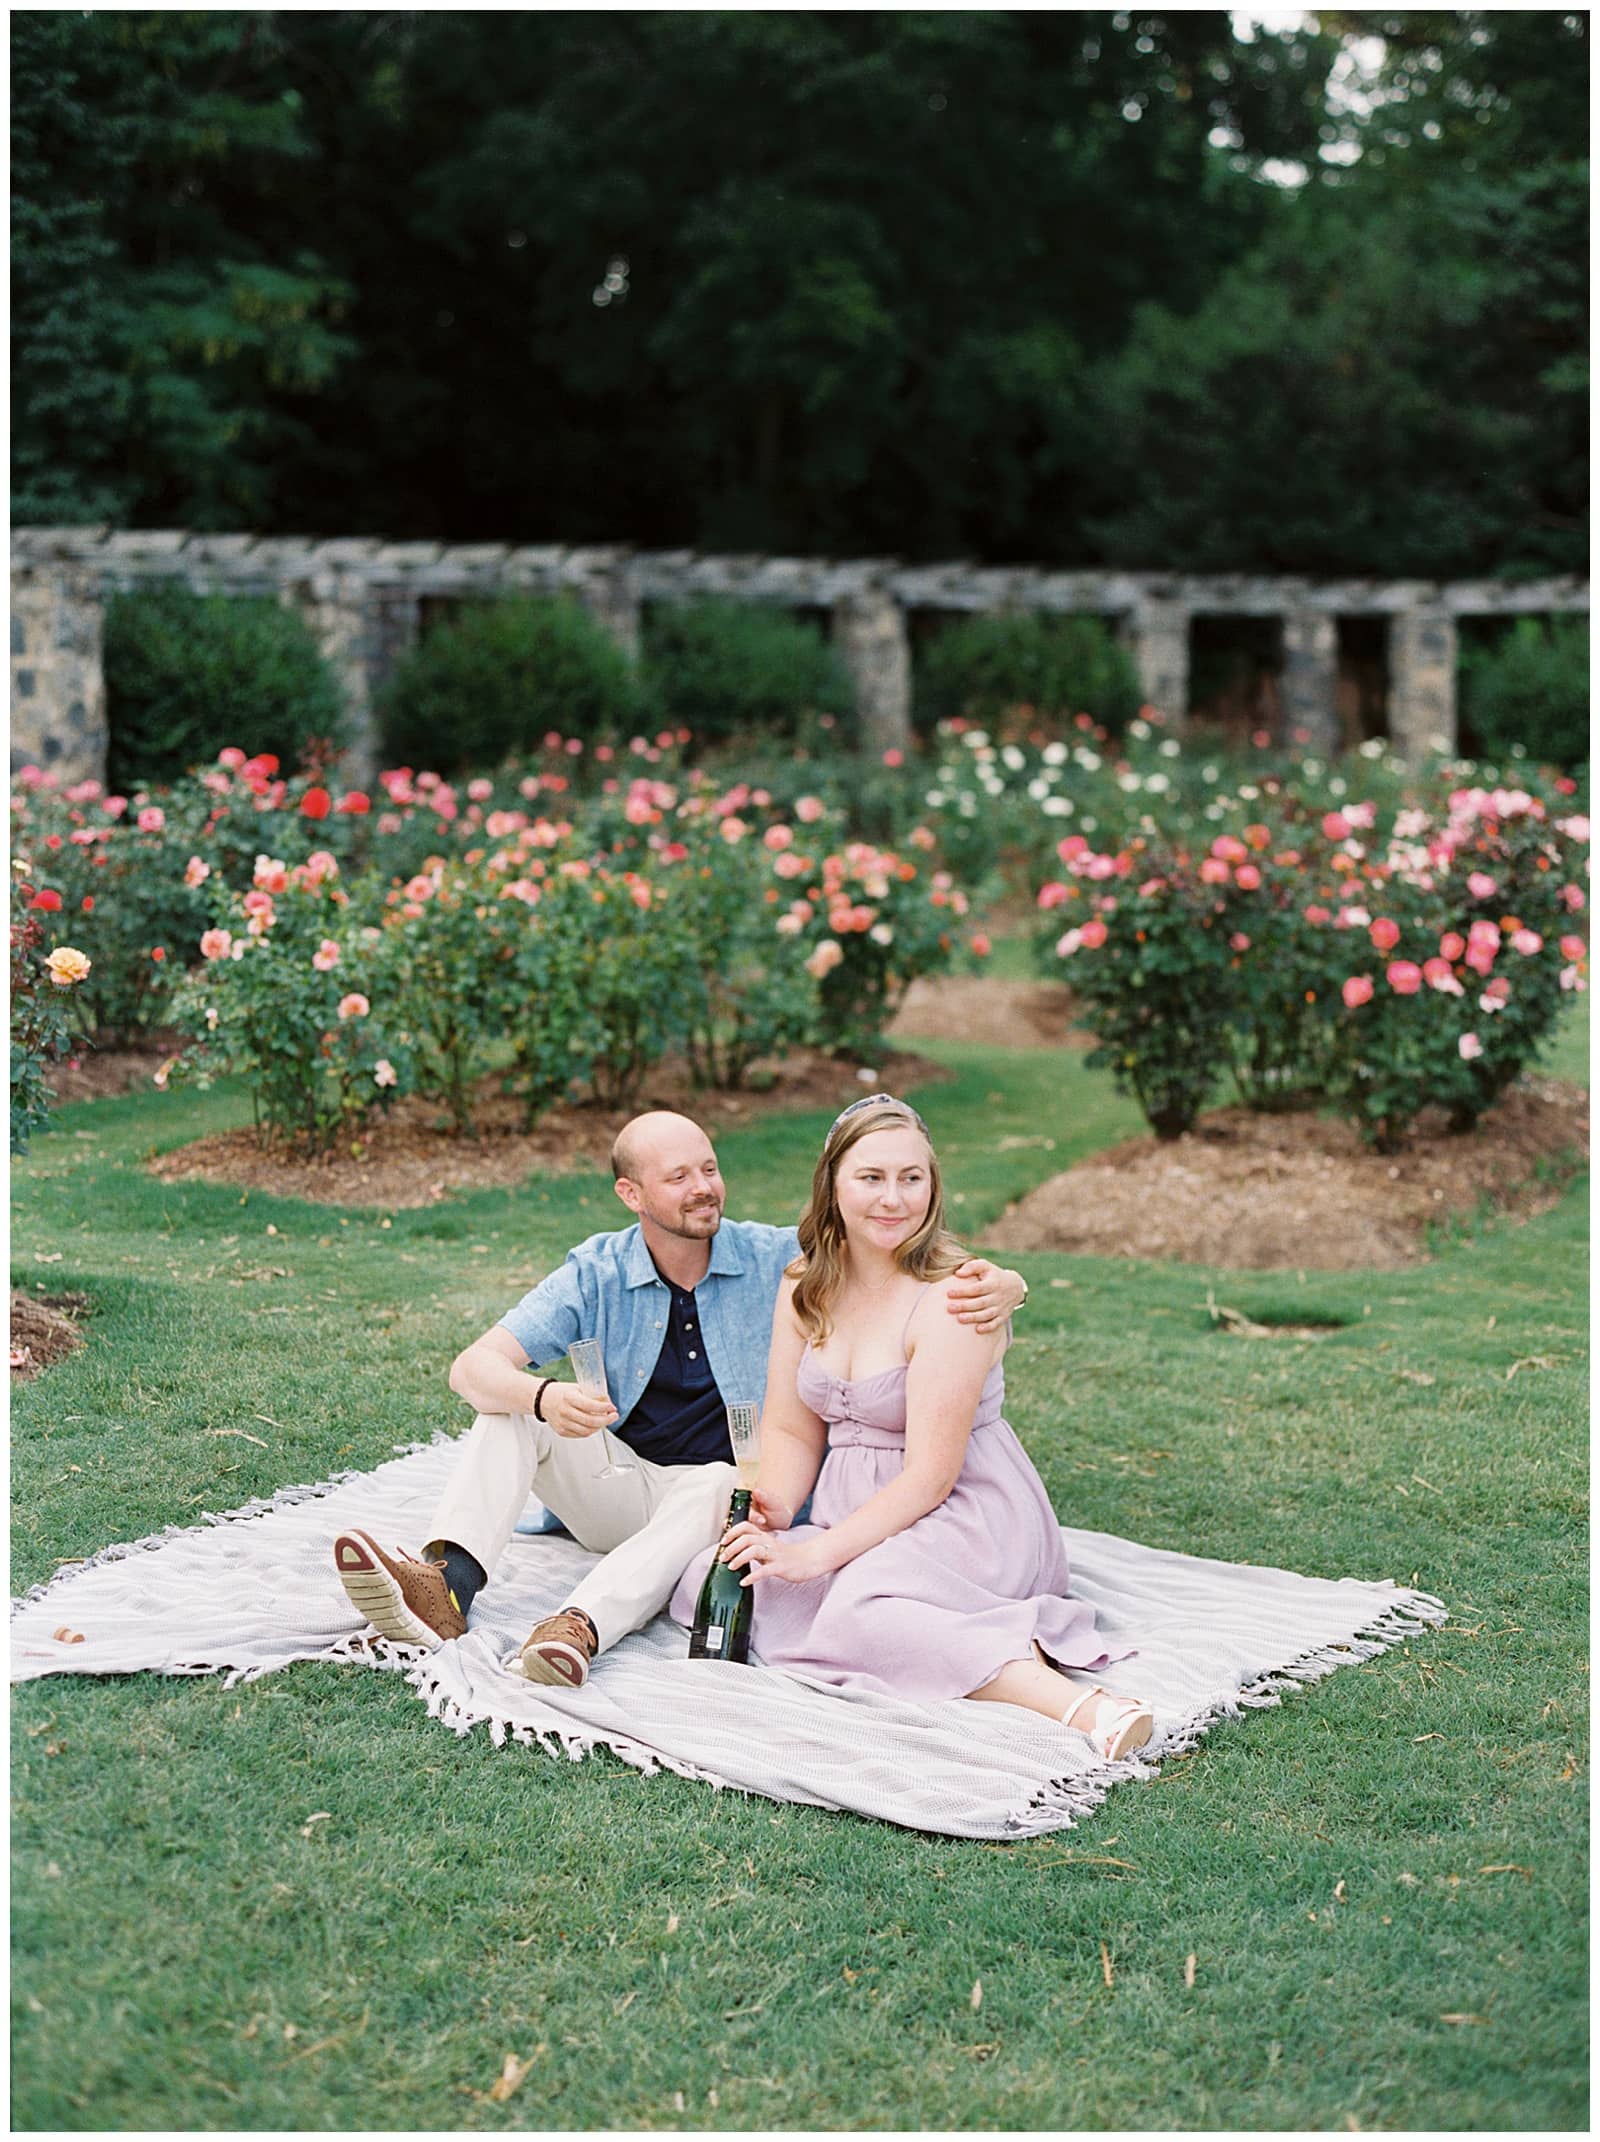 Danielle-Defayette-Photography-Raleigh-Rose-Garden-Engagement-Photos_0002.jpg